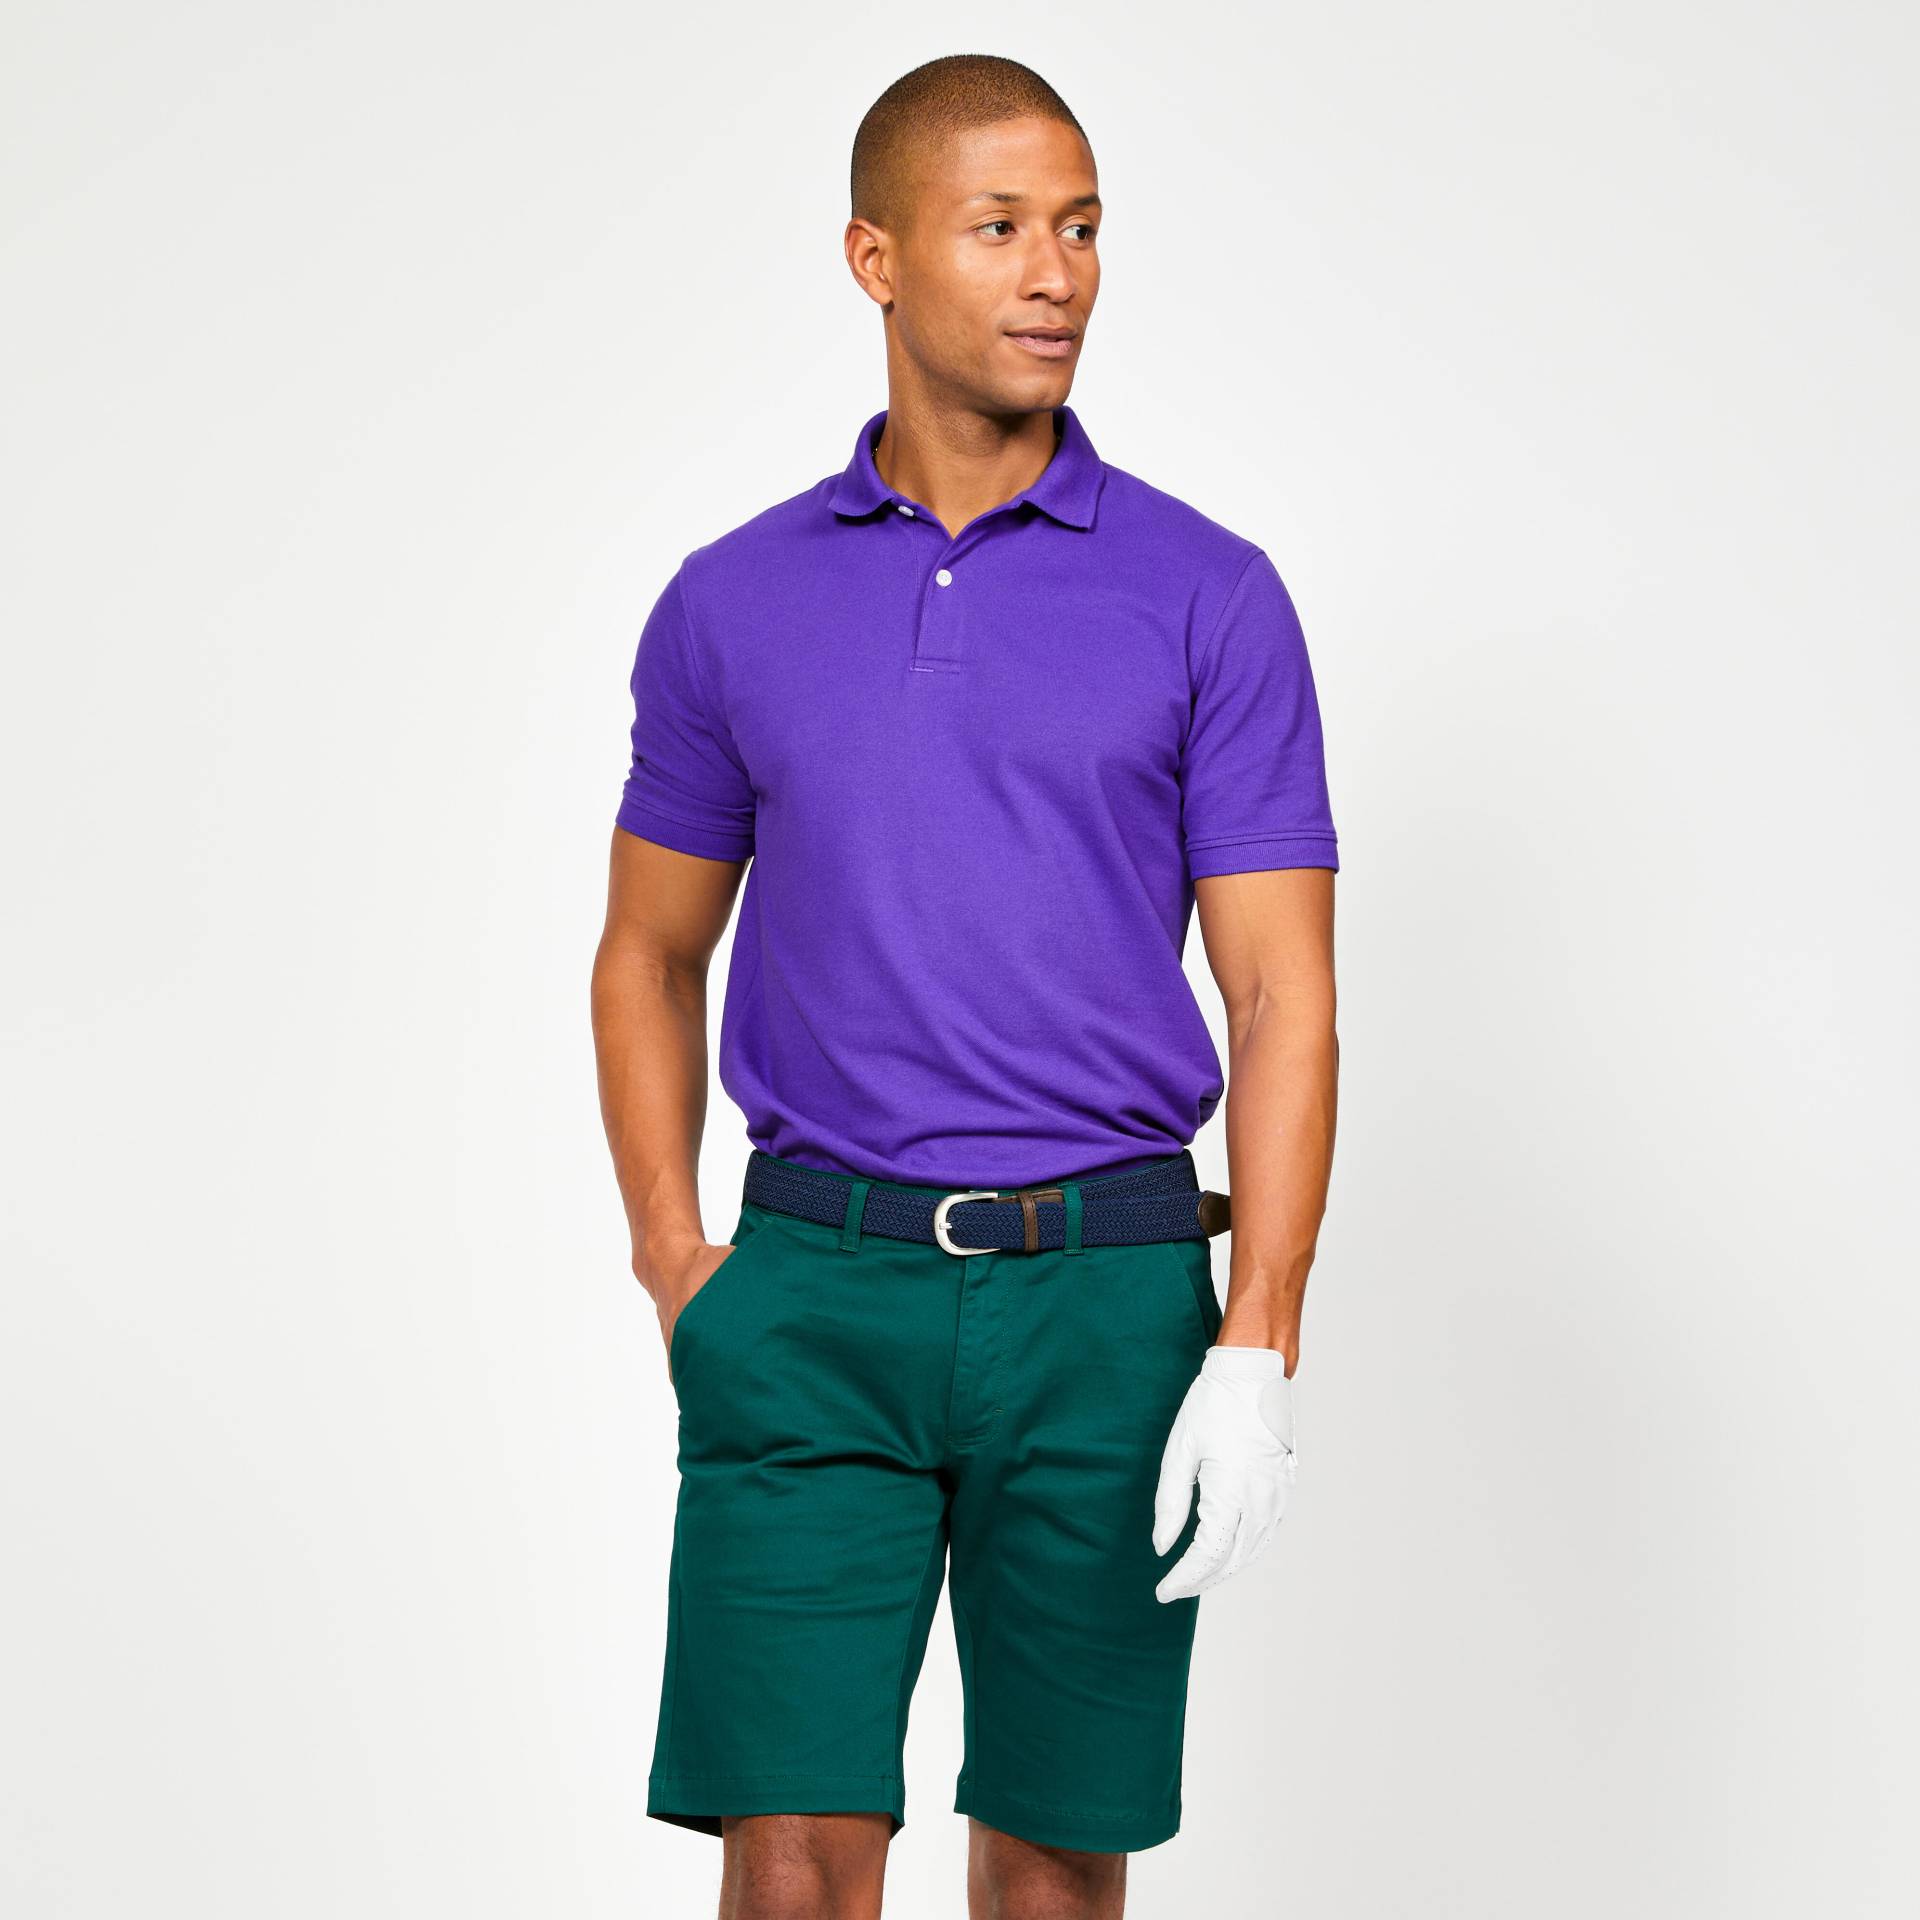 Herren Golf Poloshirt kurzarm - MW500 lila von INESIS